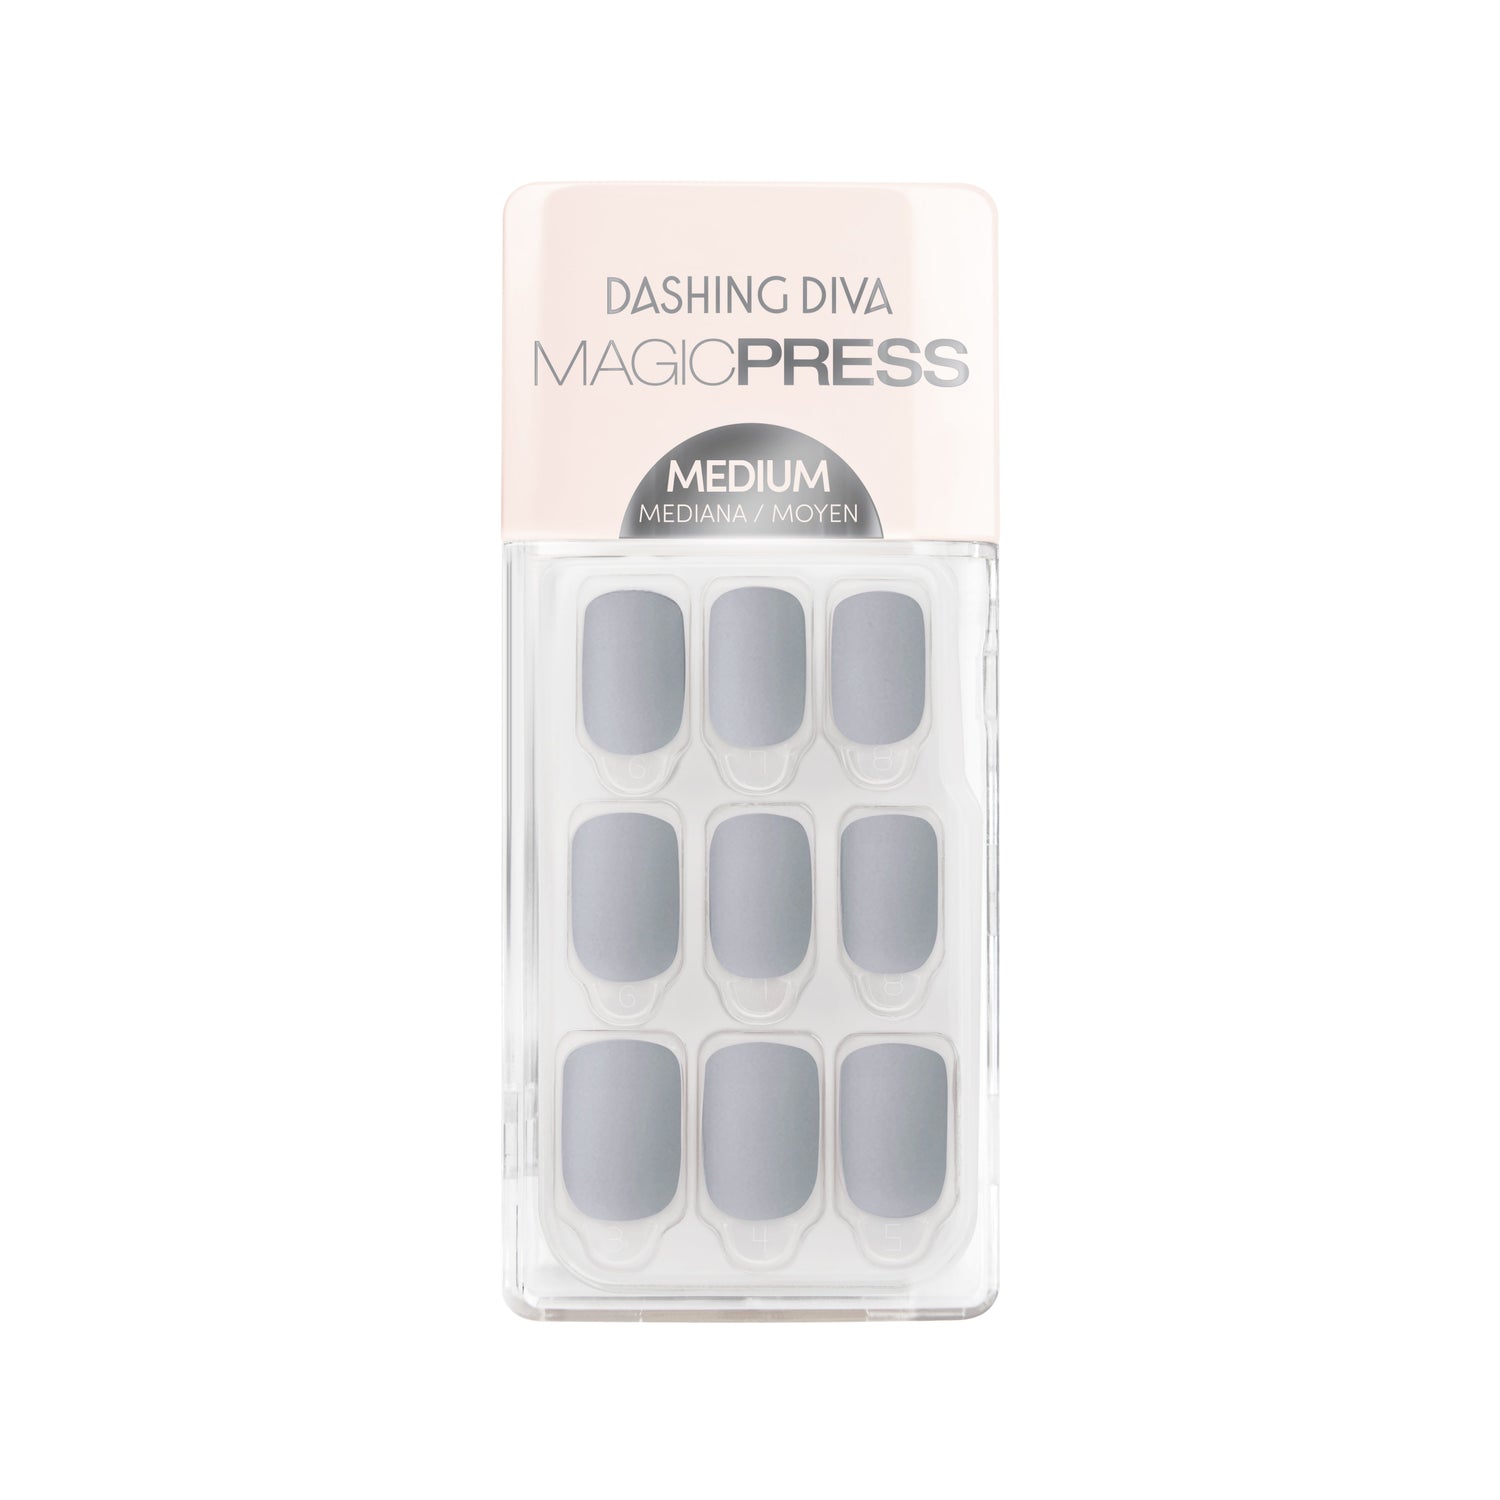 Dashing Diva MAGIC PRESS medium, square medium grey press on gel nails in matte finish.